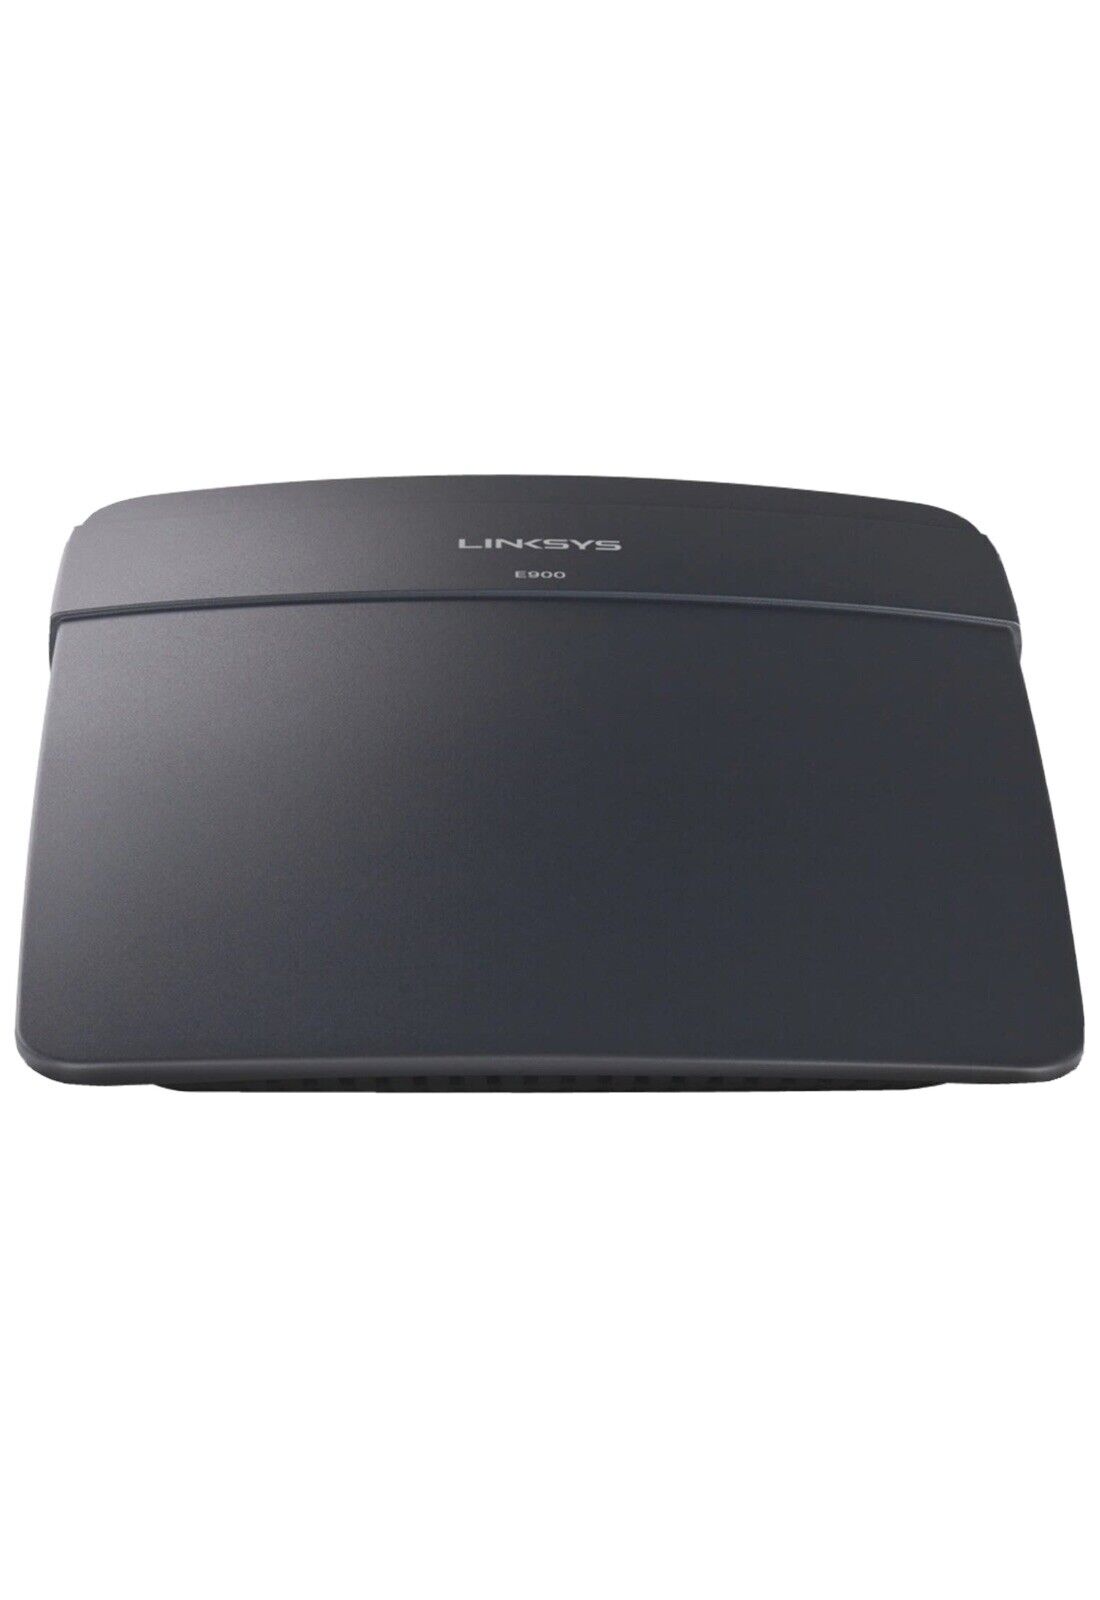 Cisco Linksys E900 Wireless-N300 Router (Windows Mac)